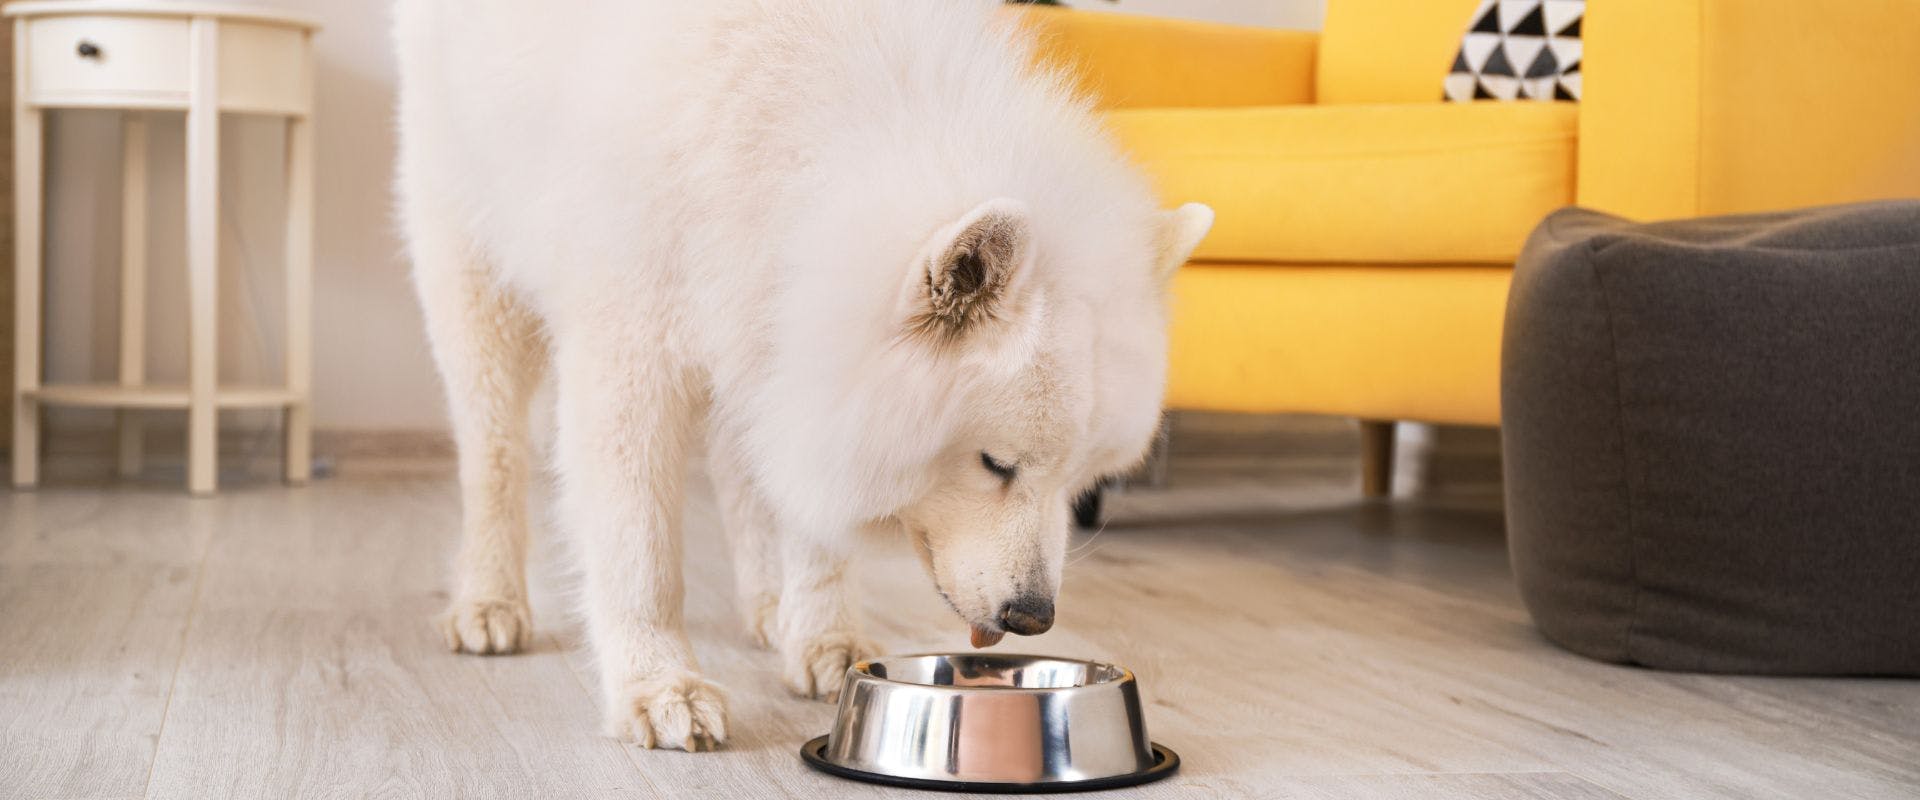 Samoyed dog eating from bowl at home